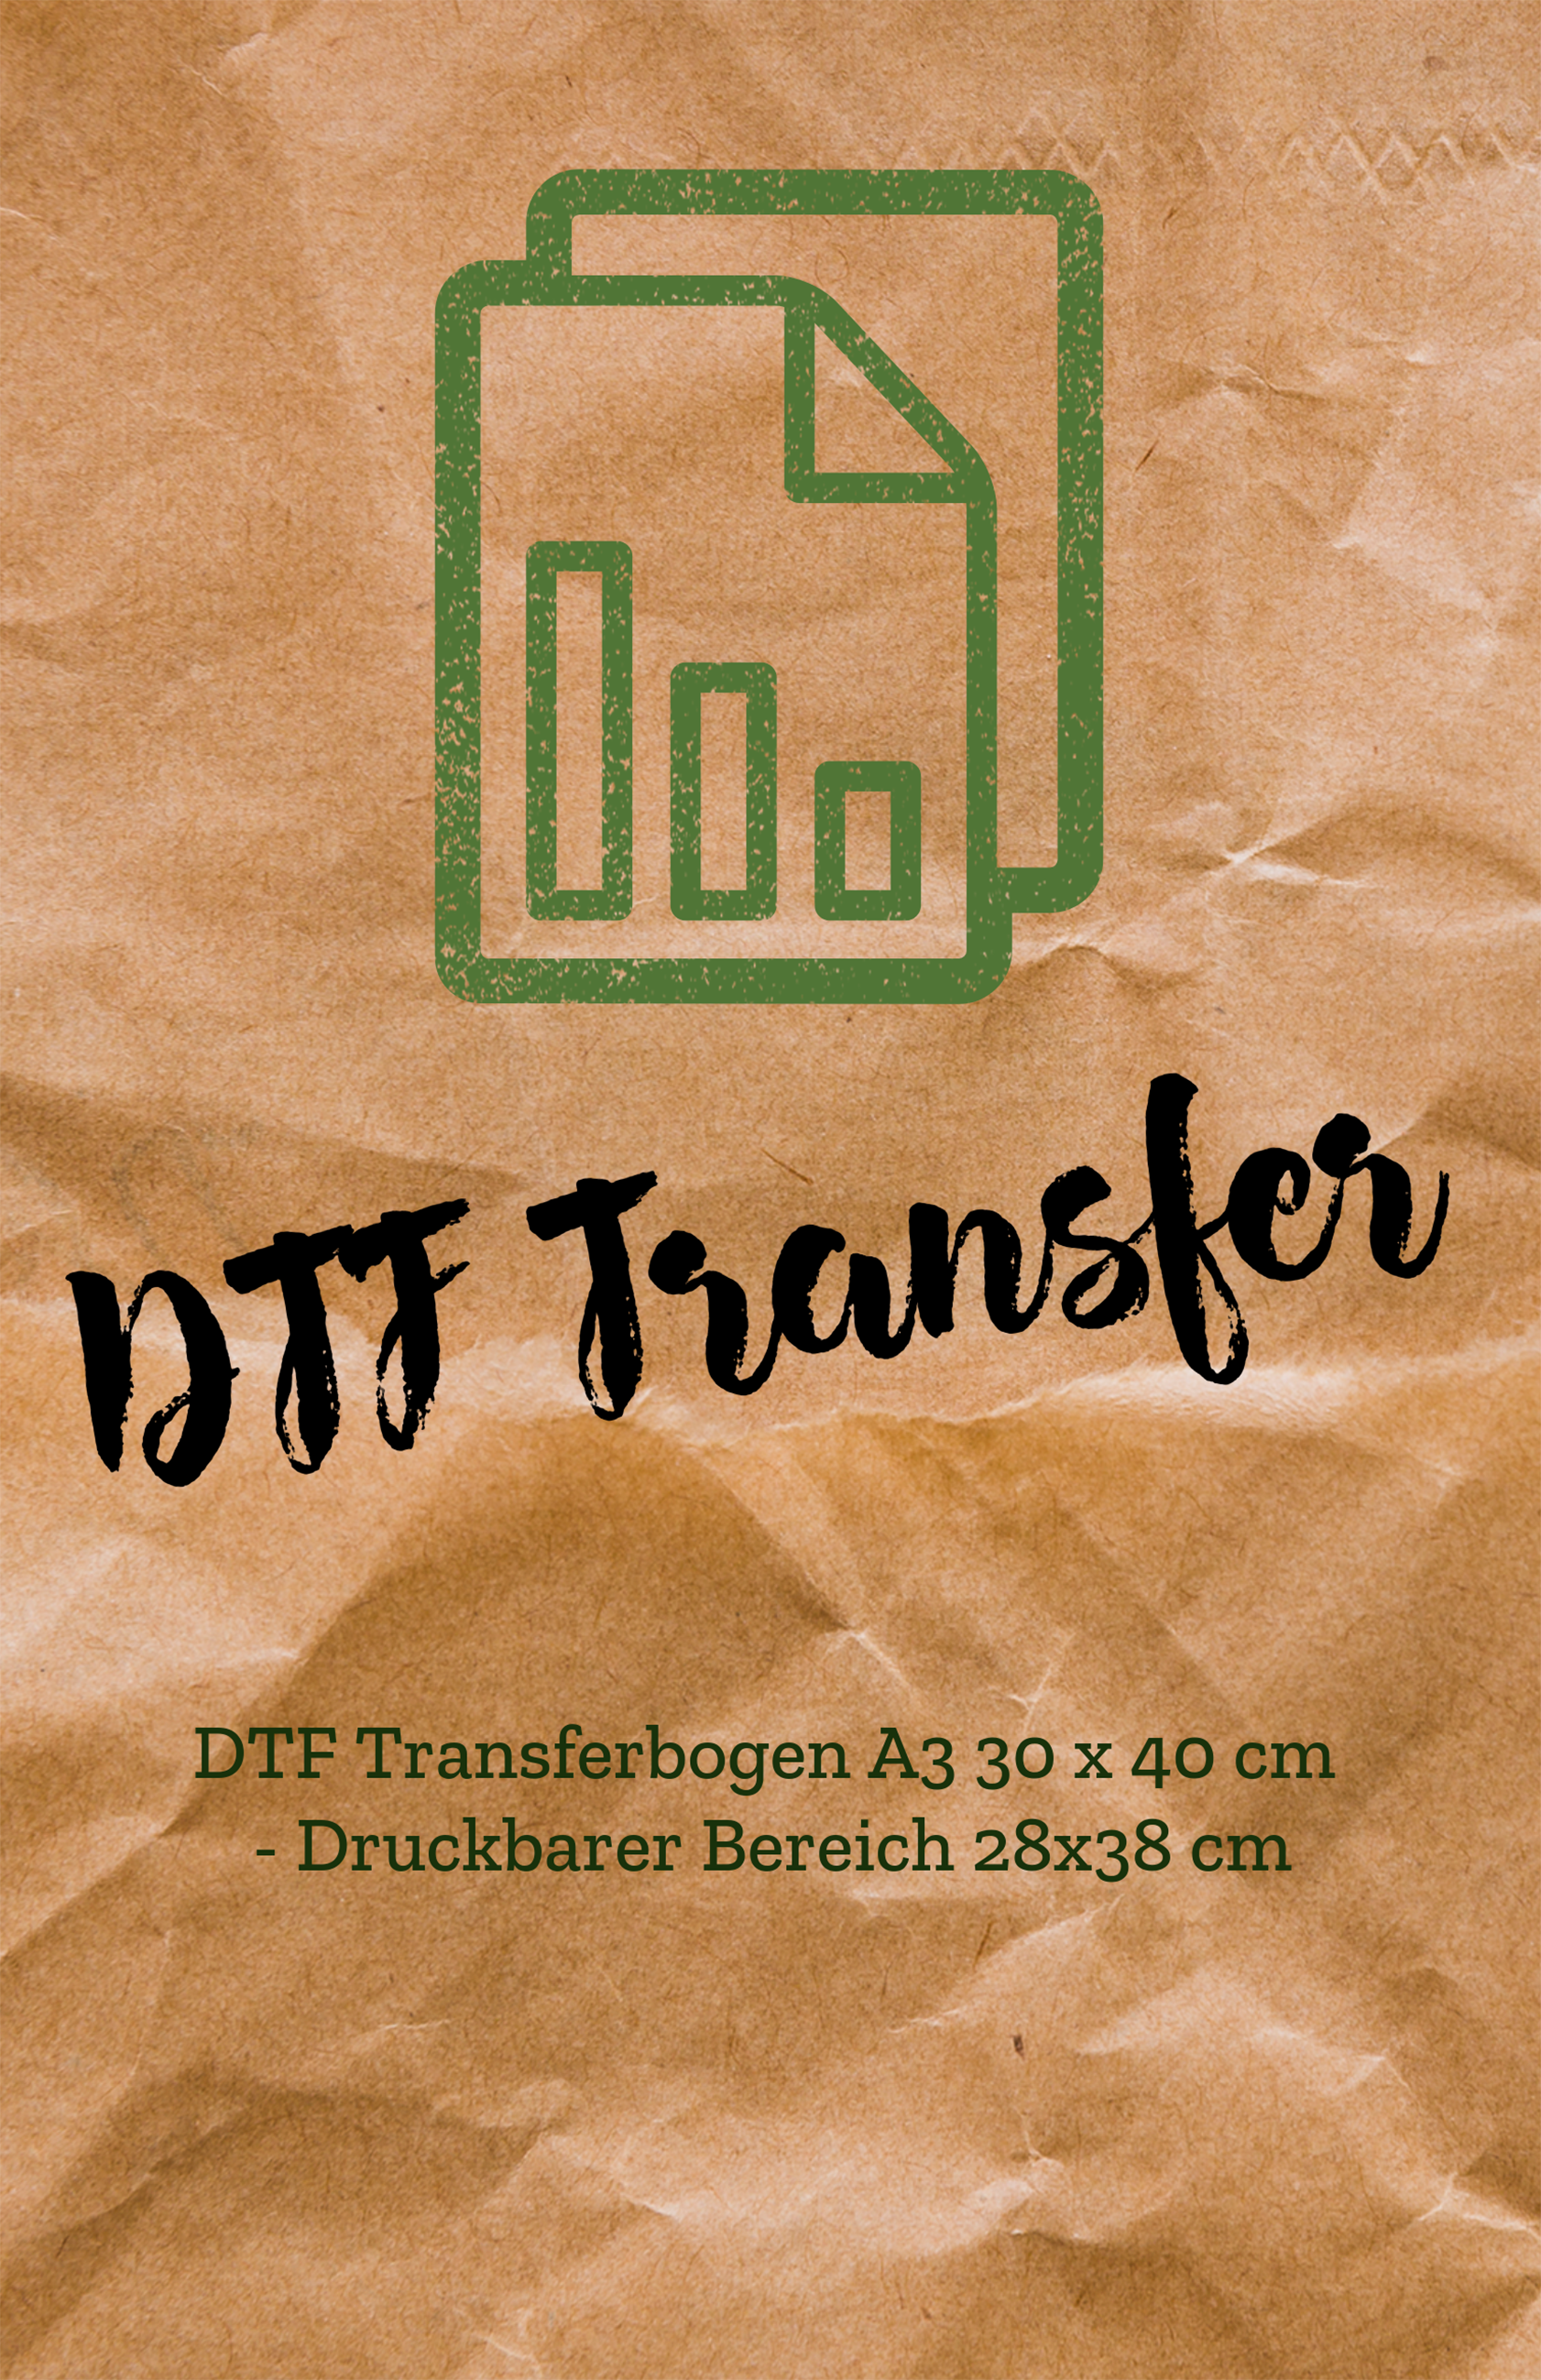 DTF (Direct to Foil) Transfer Format 28 x 38 cm Transferdruck Hot Peel